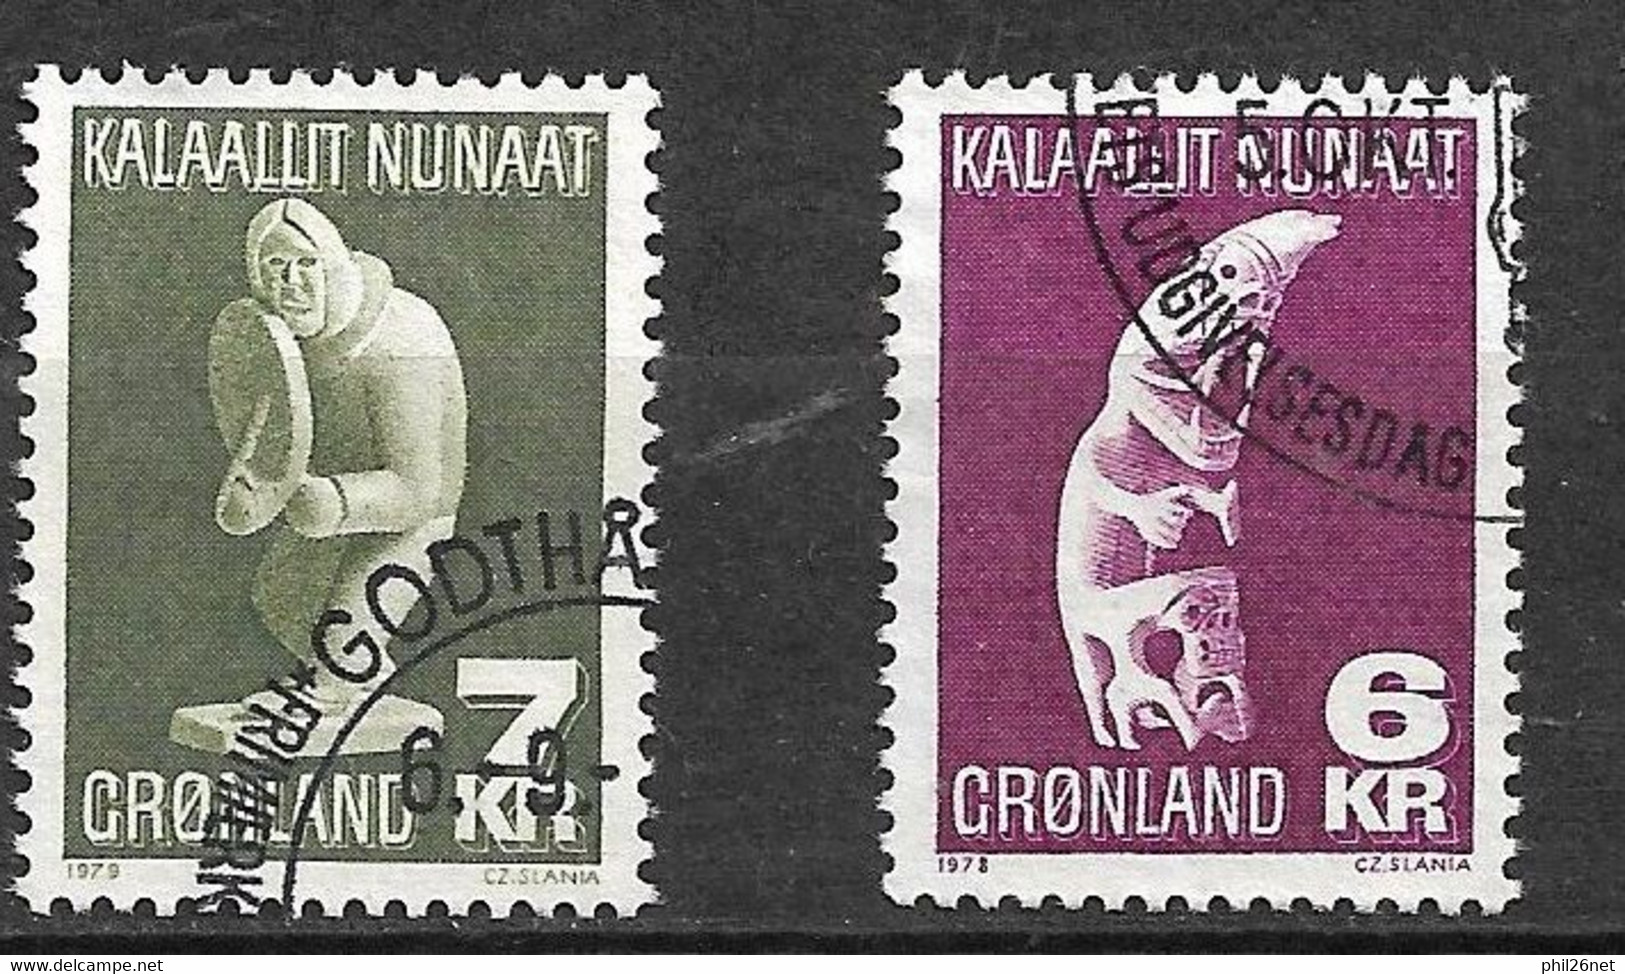 Groenland N°  99 Et 105 Artisanat   Oblitérés  B/TB    Voir  Scans    - Gebraucht